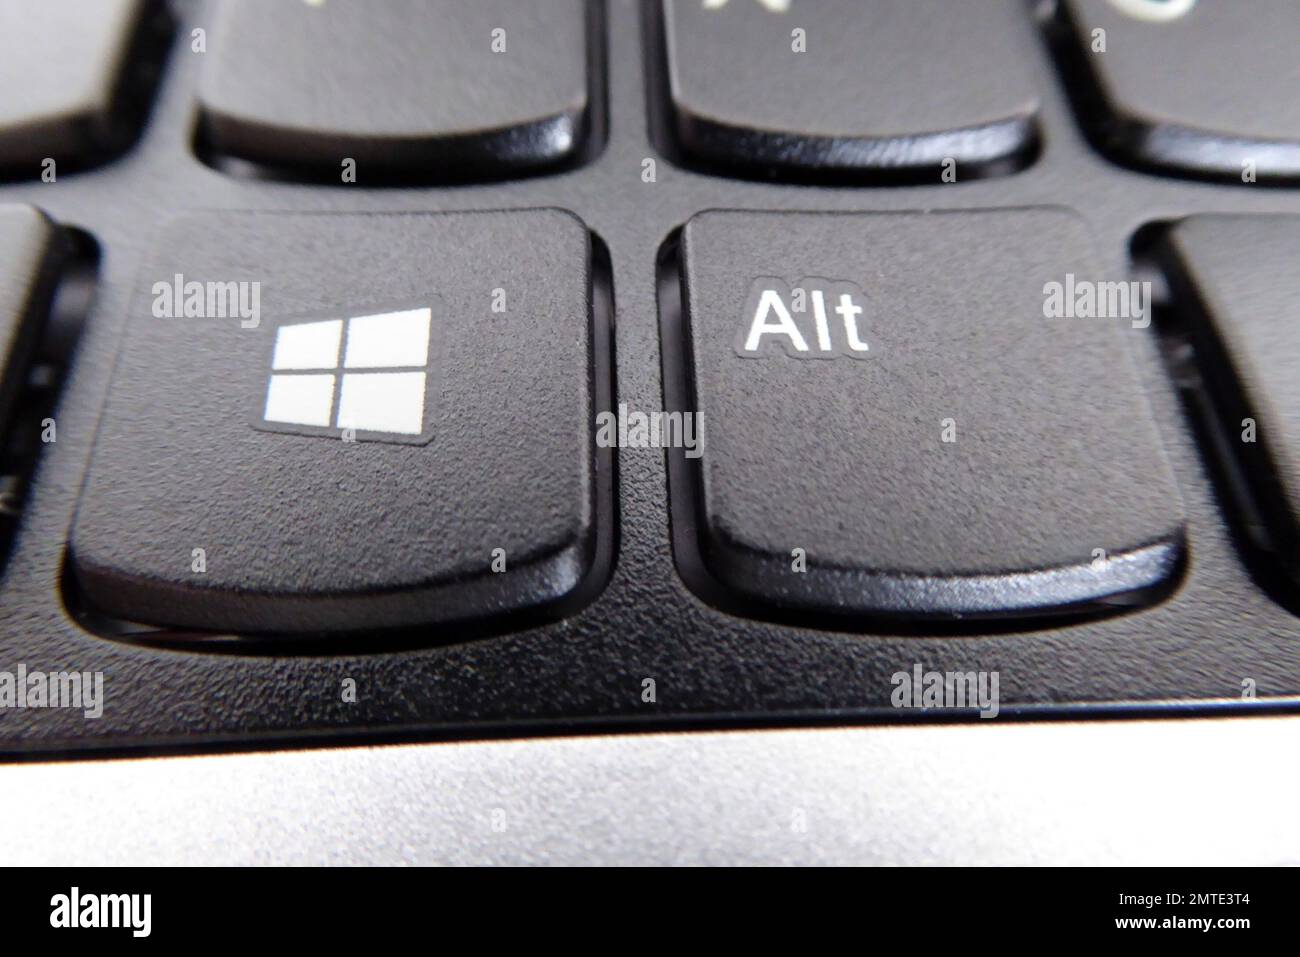 Windows Taste und  ALT Taste / Tastatur / Keyboard Stock Photo